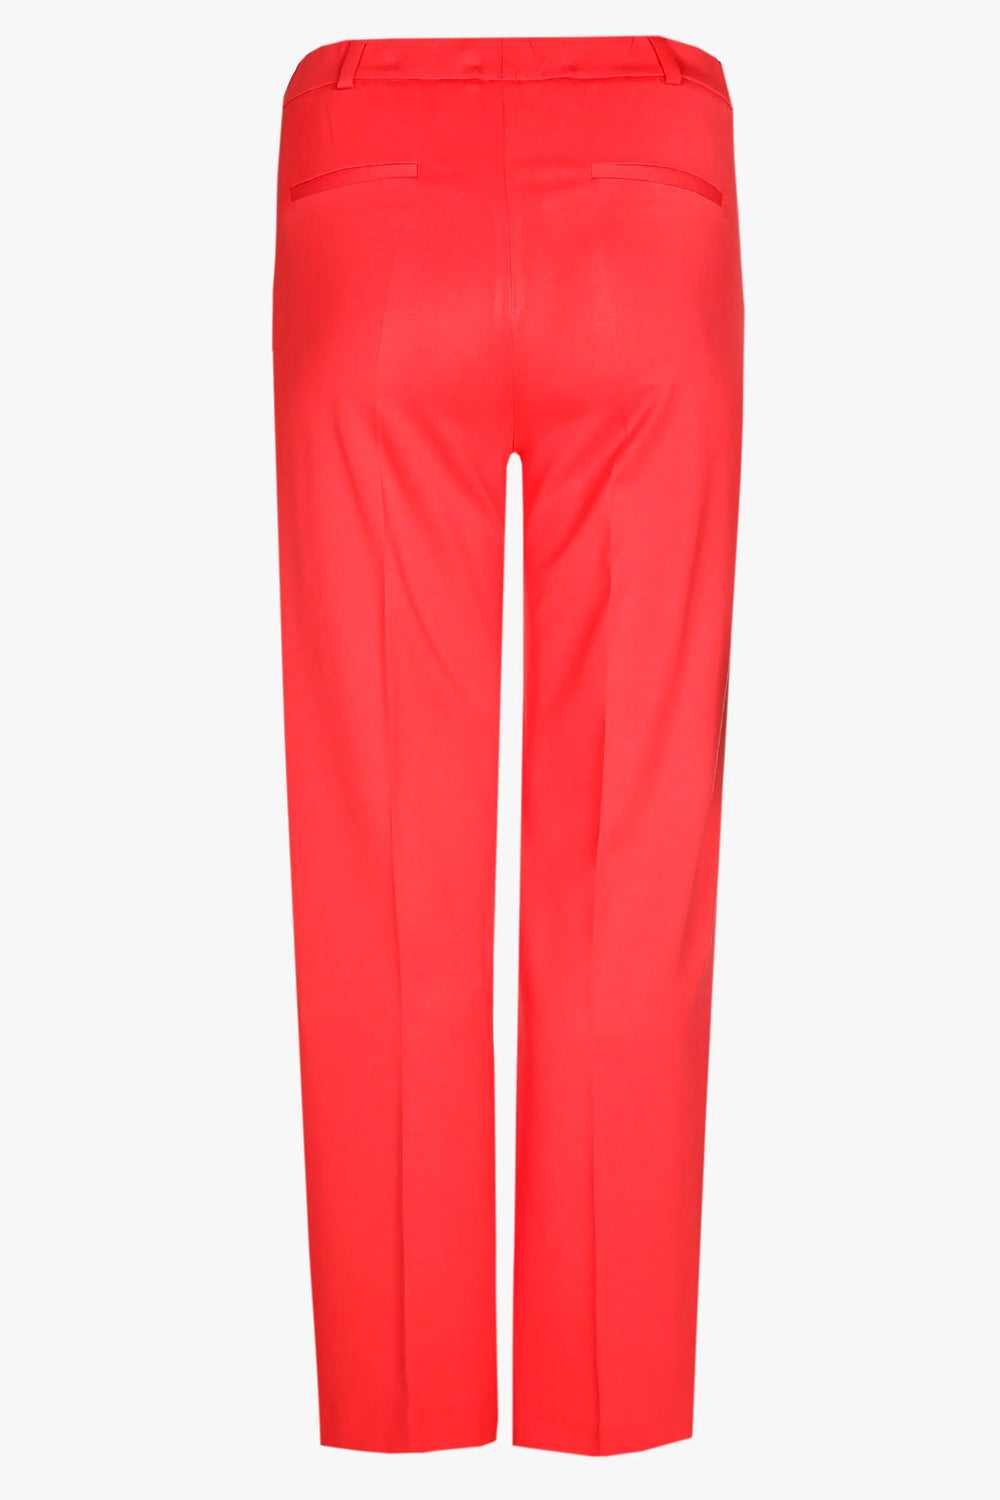 rode broek met zachte touch - xandres - - grote maten - dameskleding - kledingwinkel - herent - leuven